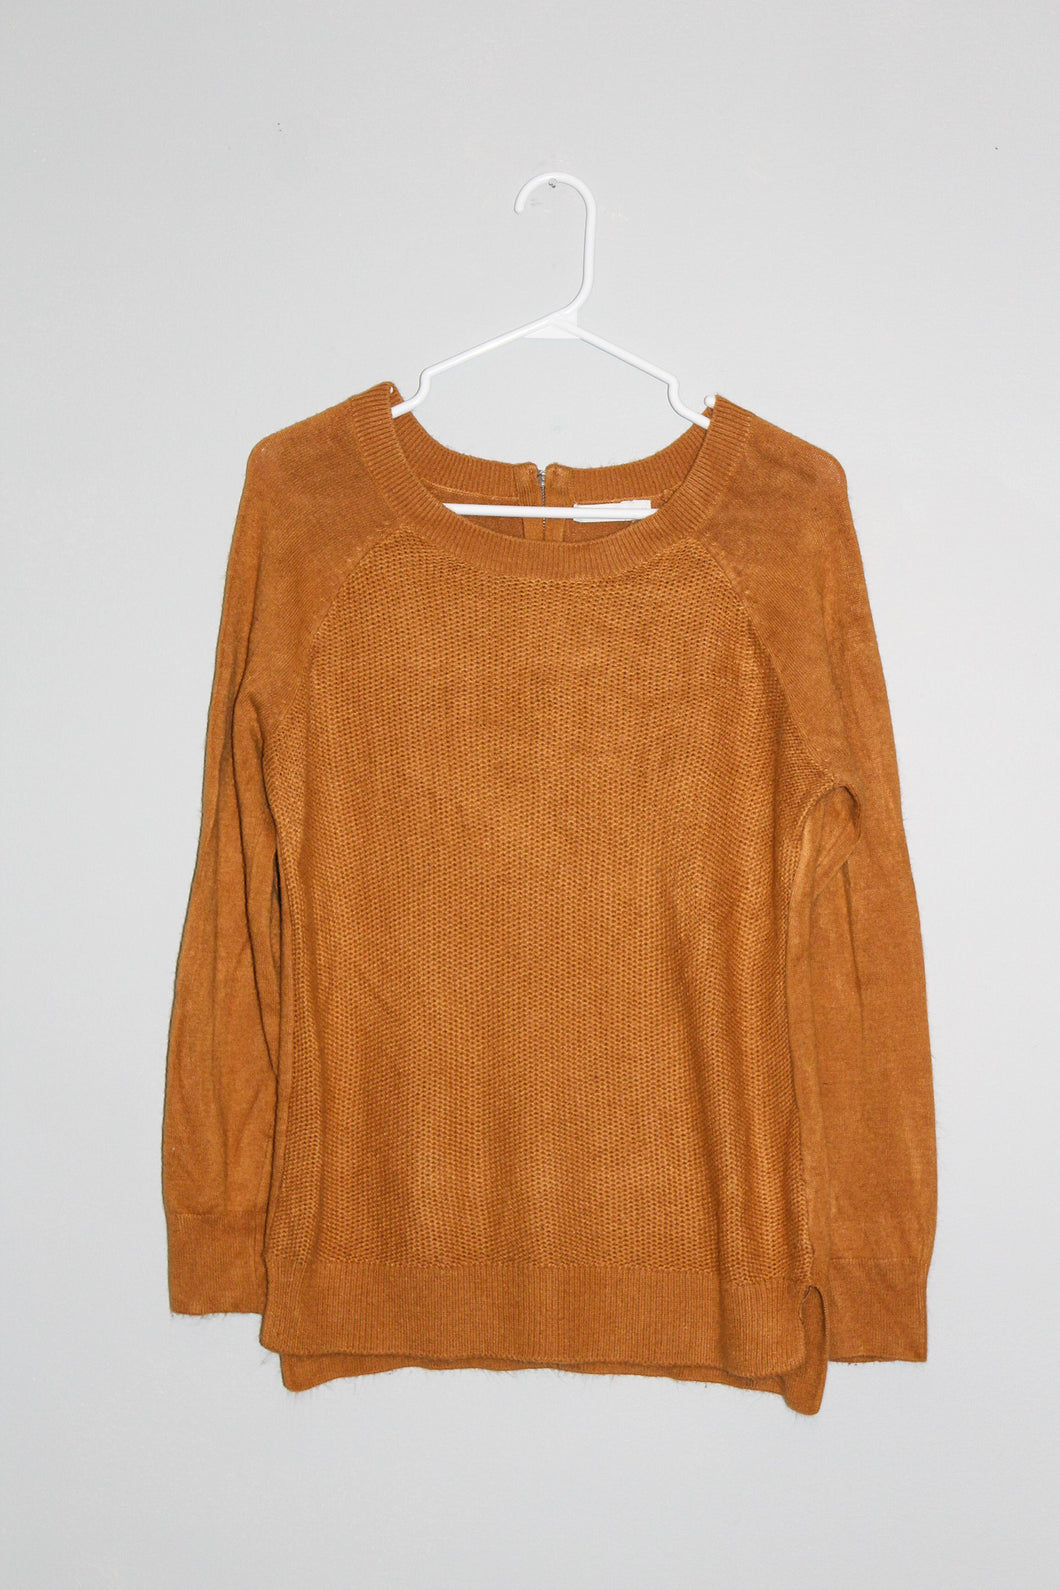 Reitman's Burnt Orange Sweater Size Medium